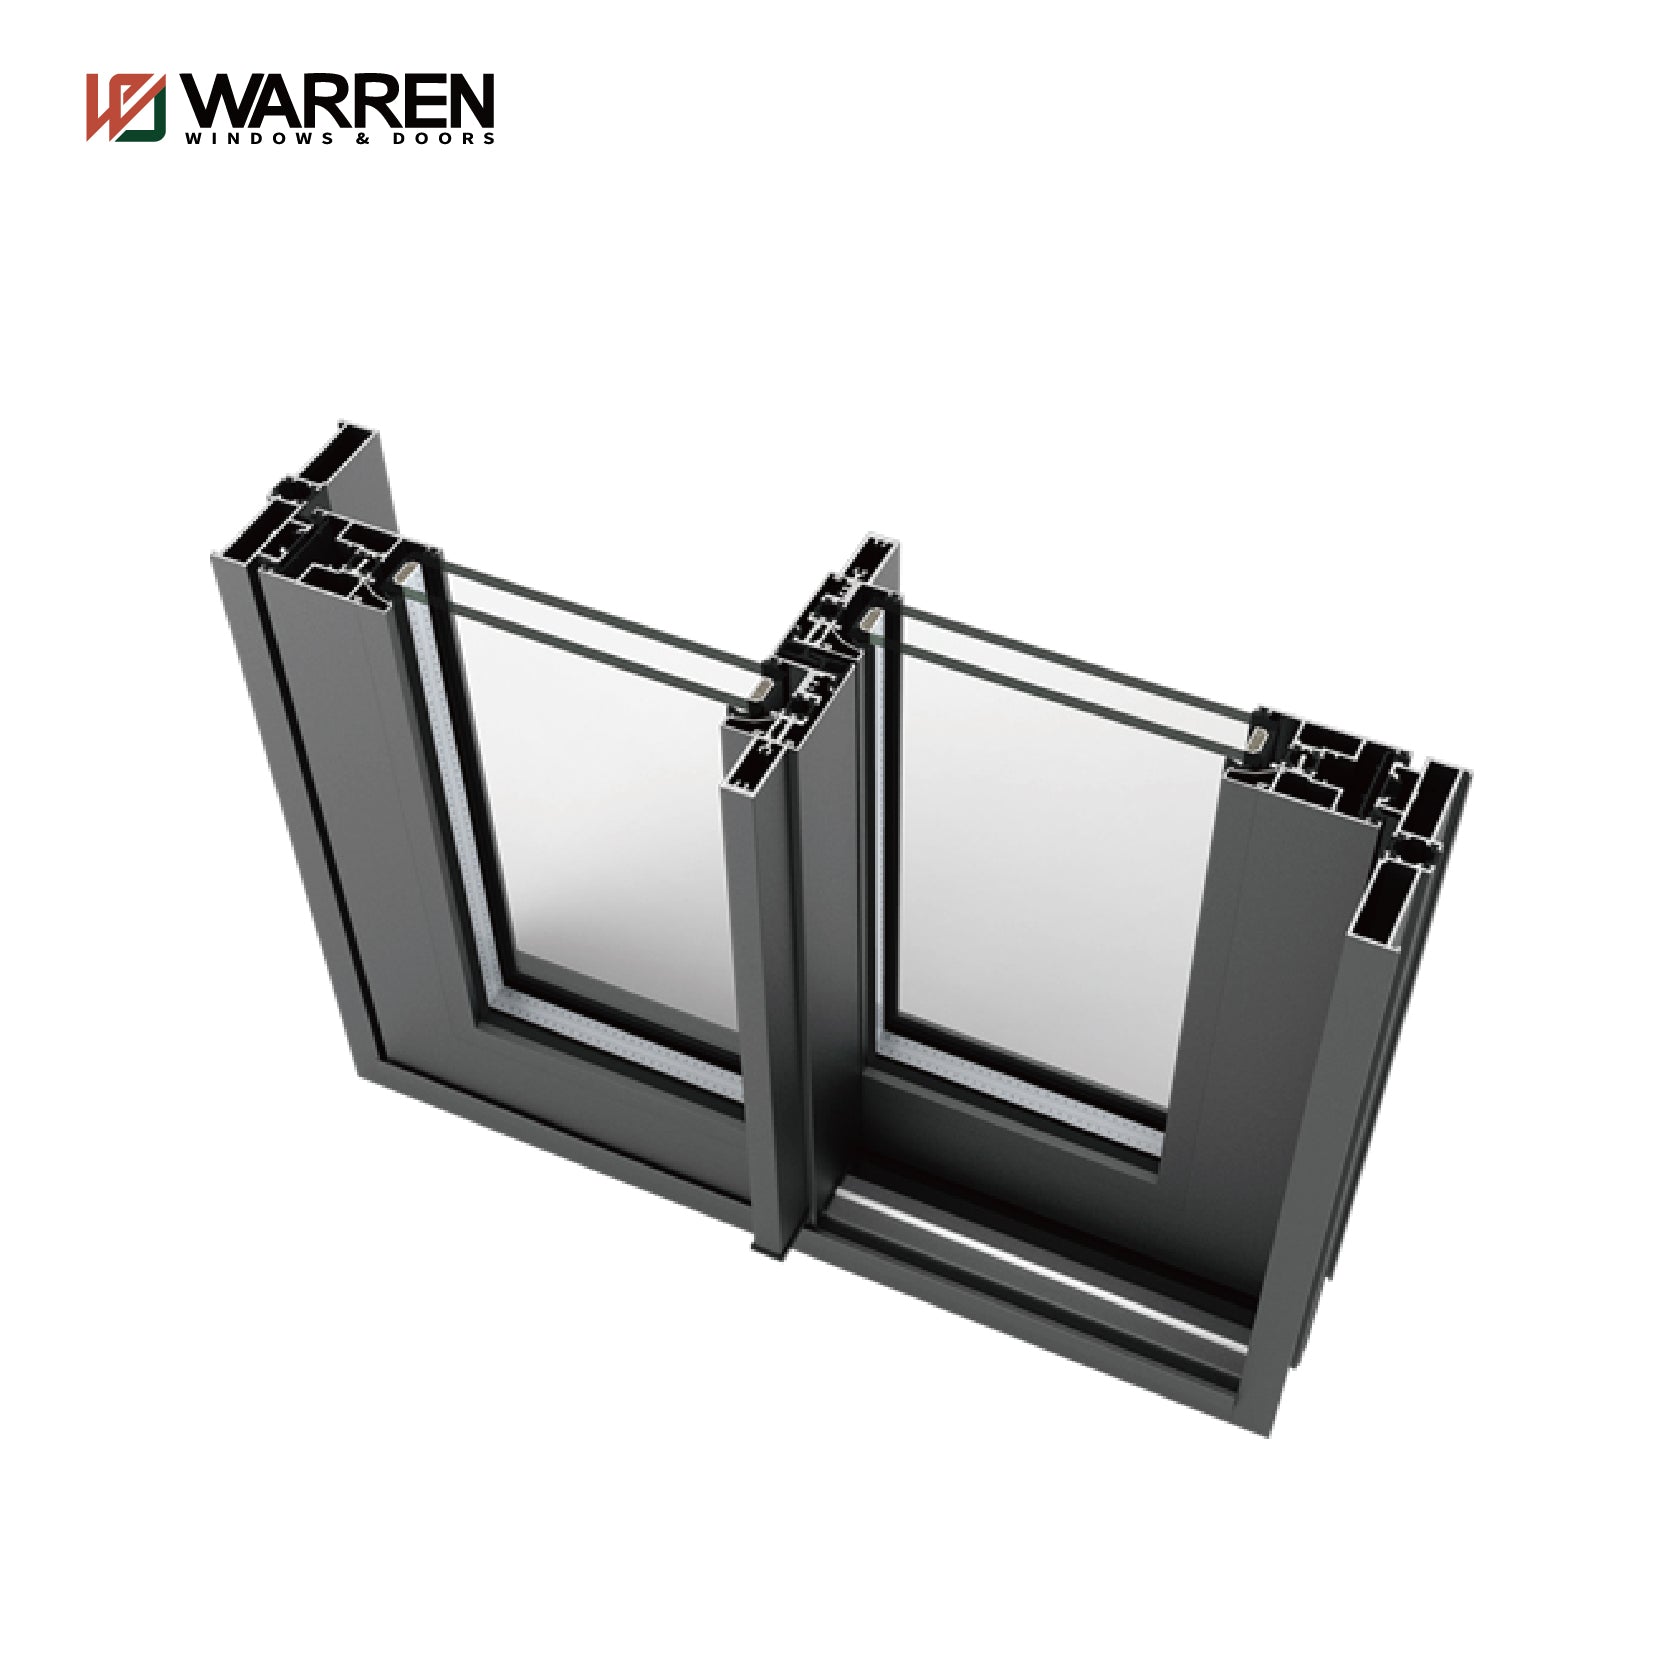 Warren Strong Thermal Broken Patio Door Wholesale Aluminium Narrow Frame Large Glass Lift And Slide Sliding House Doors